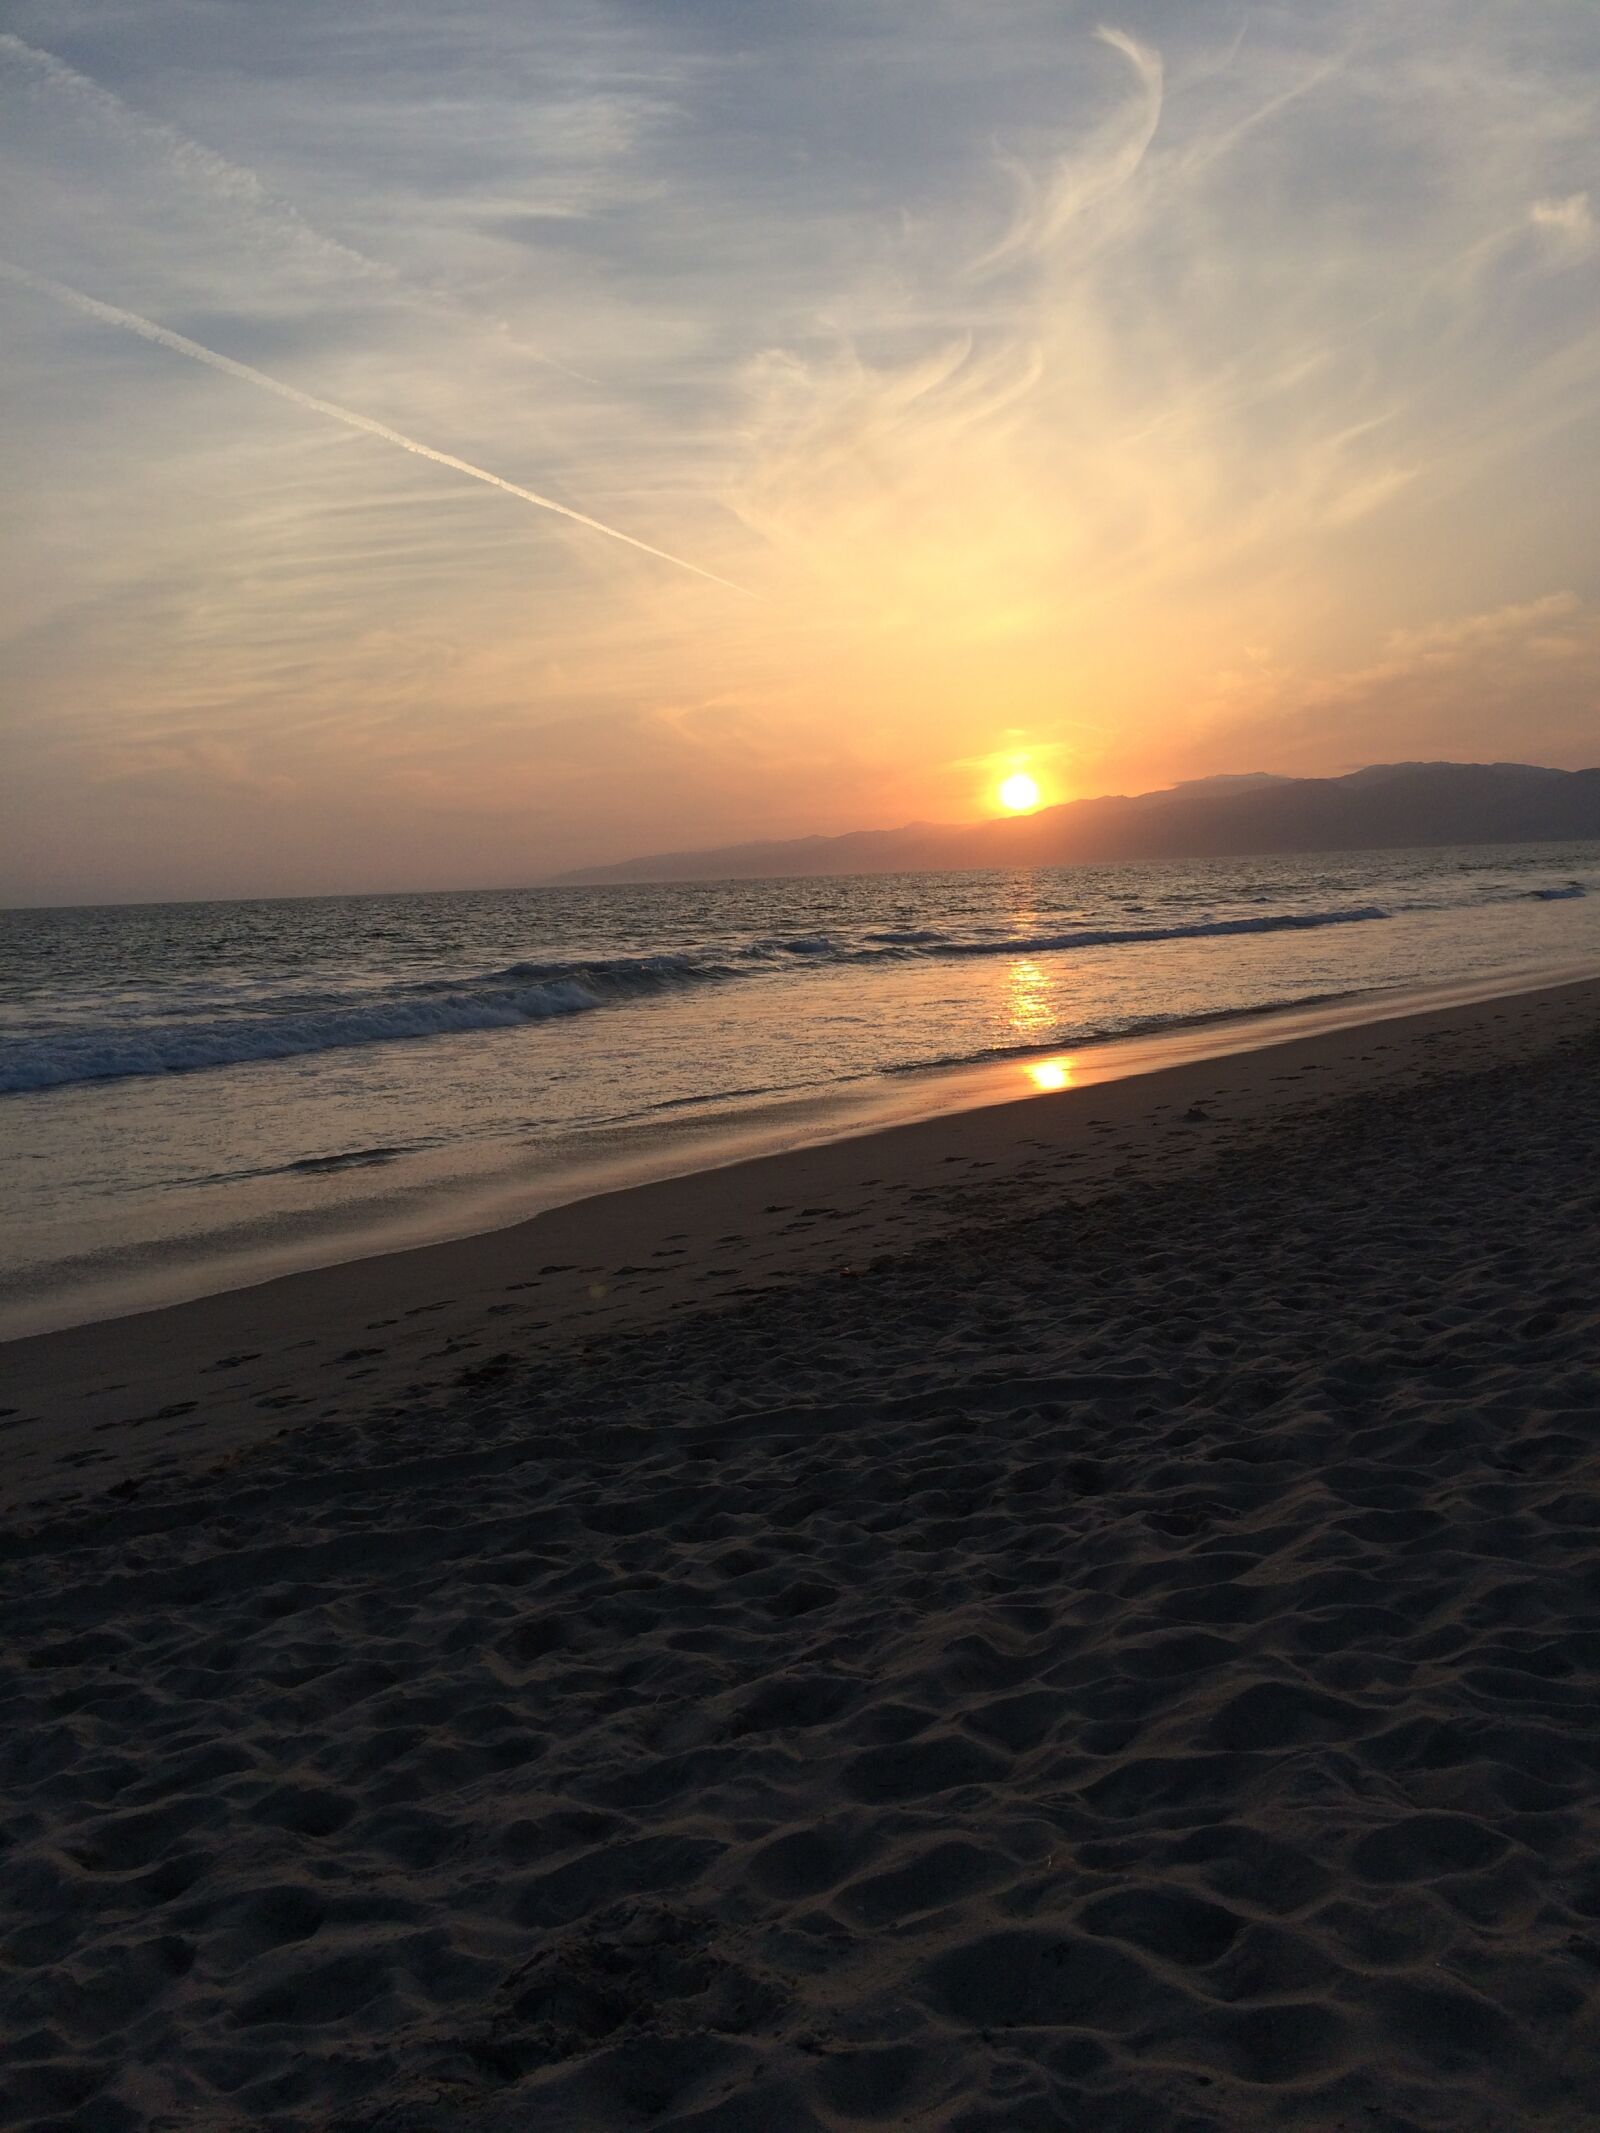 iPhone 5s back camera 4.15mm f/2.2 sample photo. Sunset, beach, summer photography